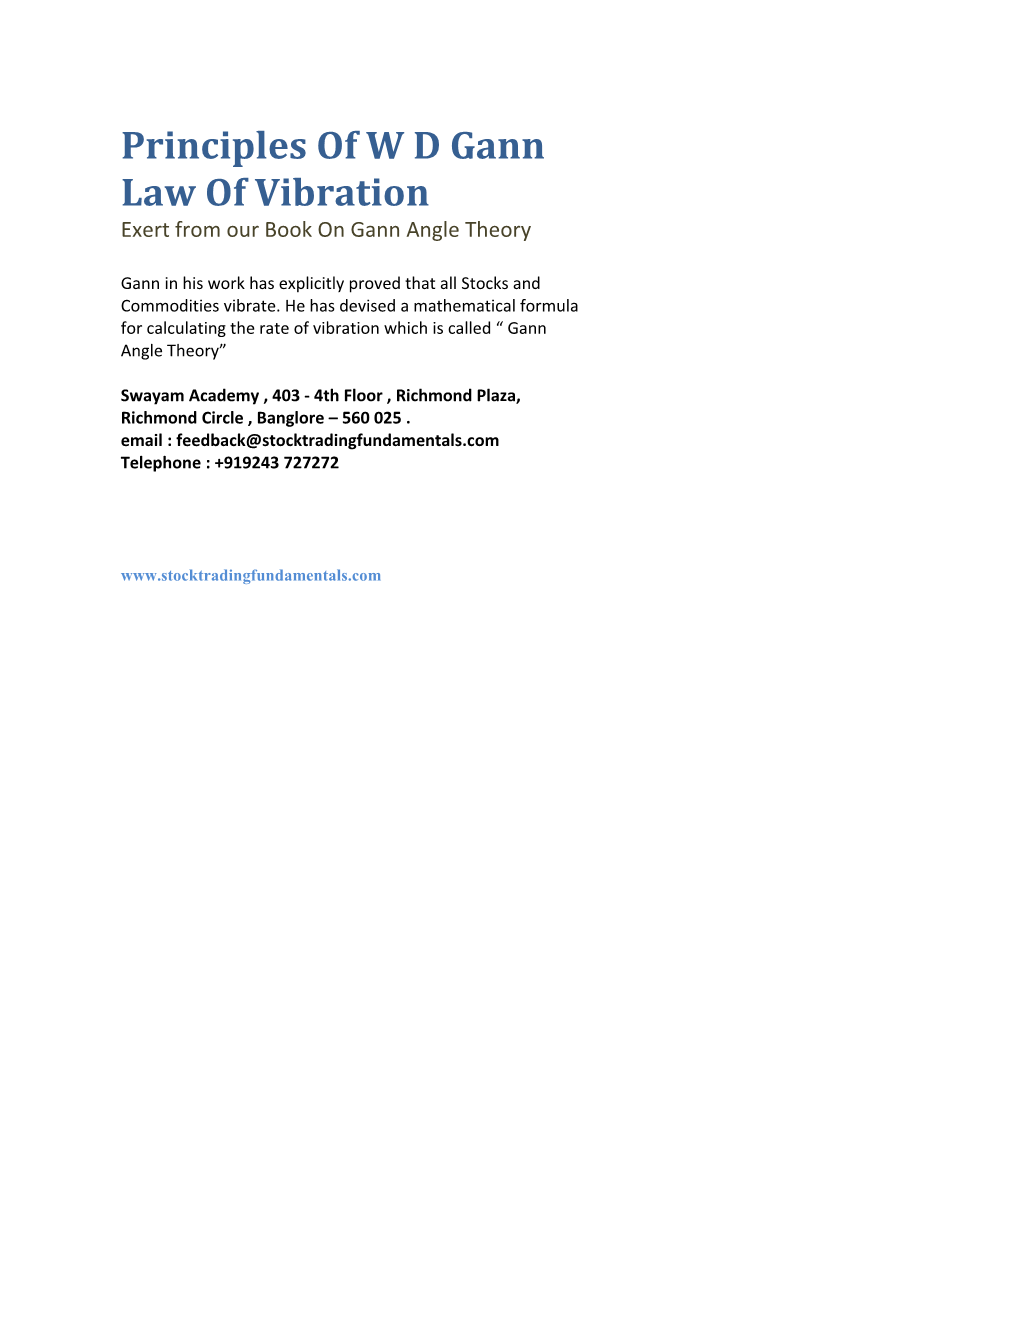 Principles of W D Gann Law of Vibration